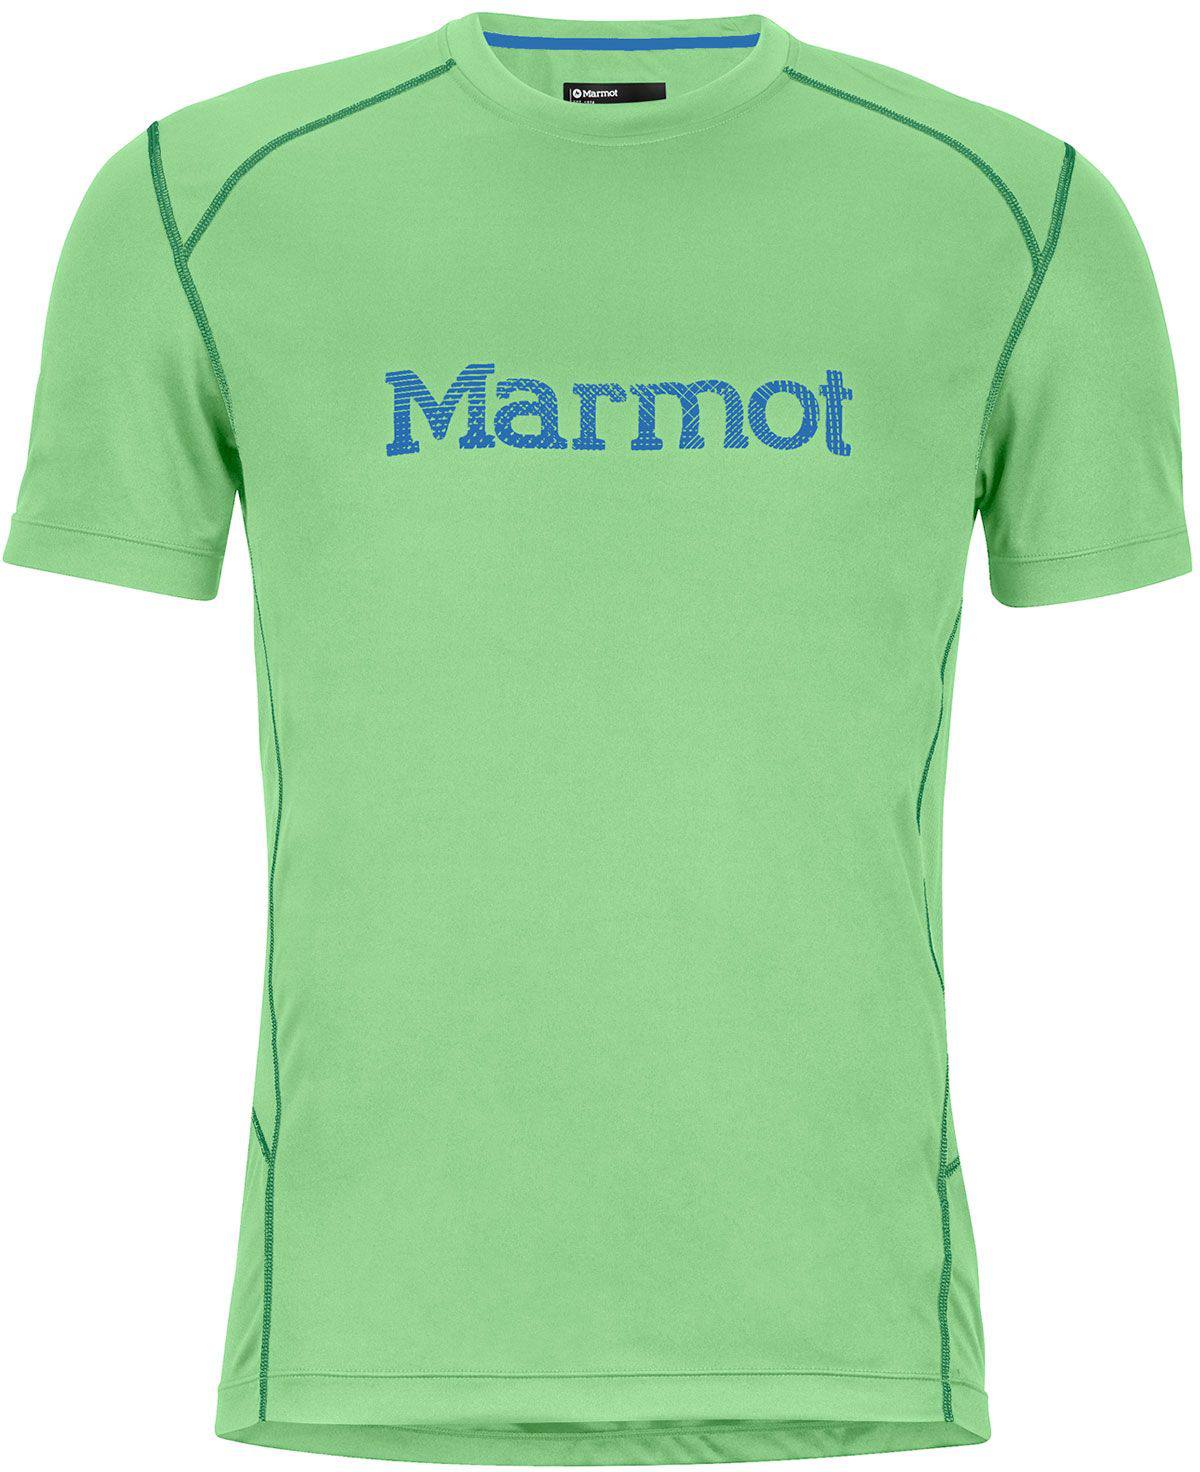 Marmot Windridge with Graphic Short-Sleeve Shirt Men’s